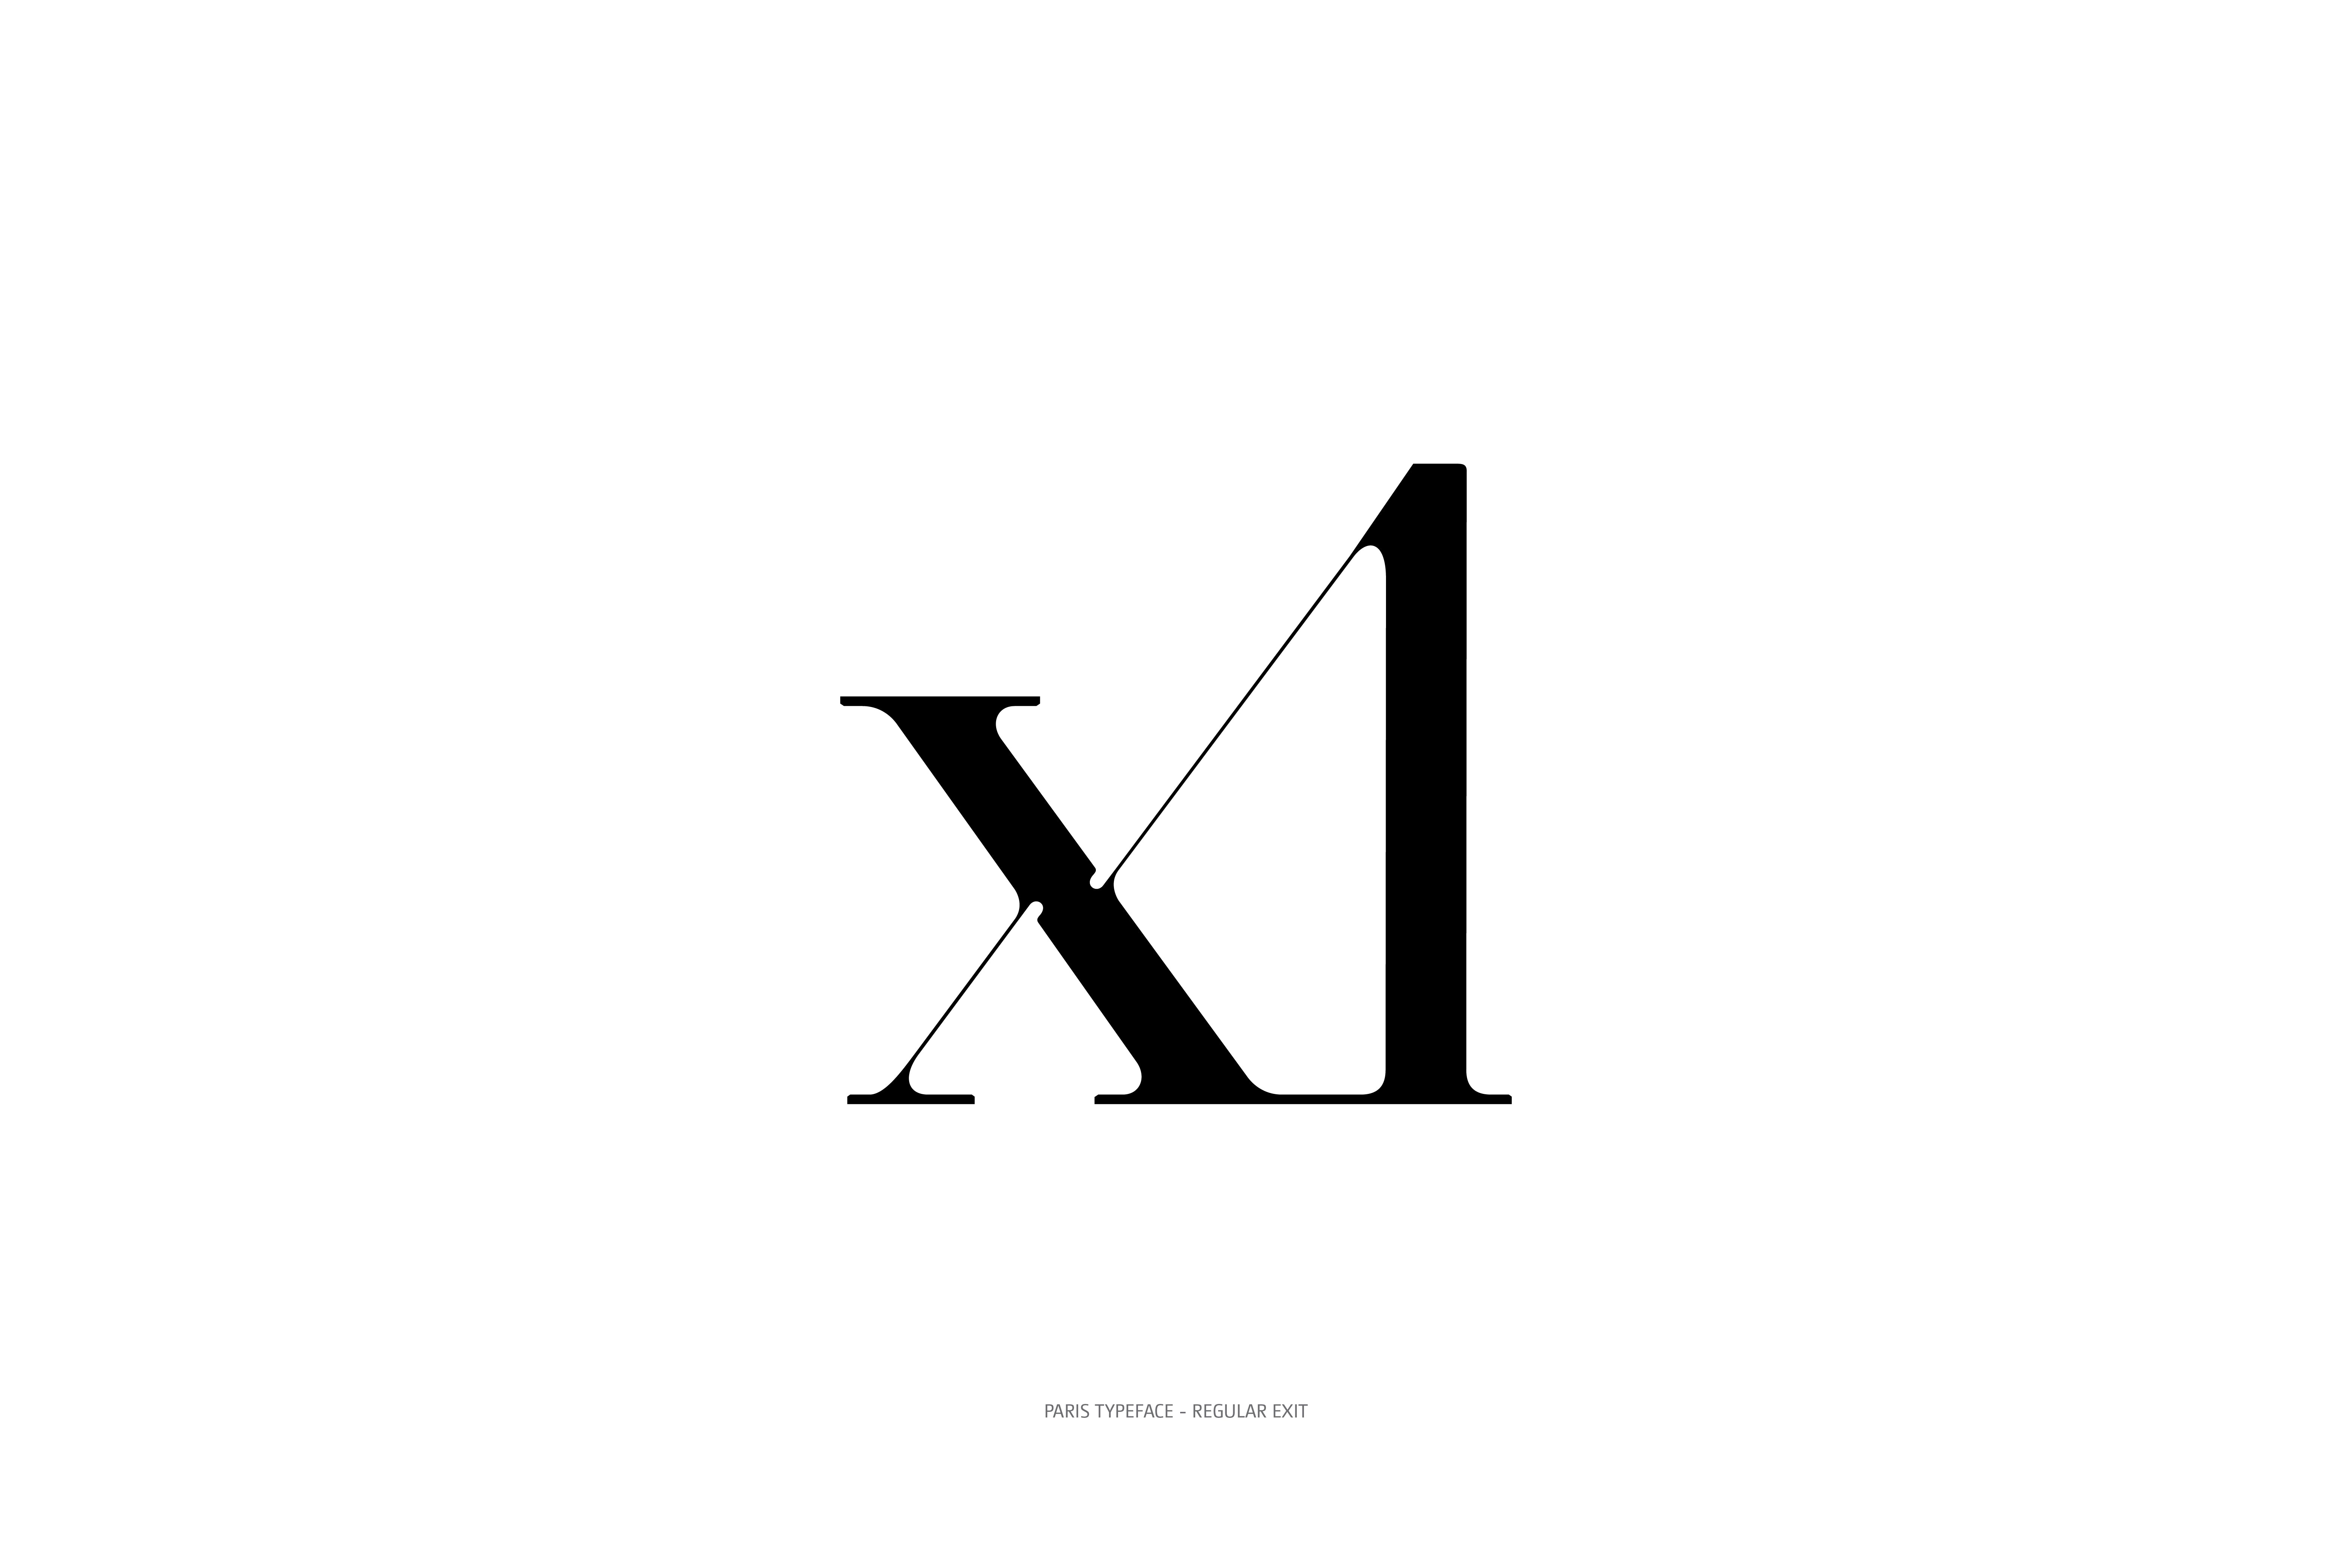 Paris Typeface Regular Exit xl ligature